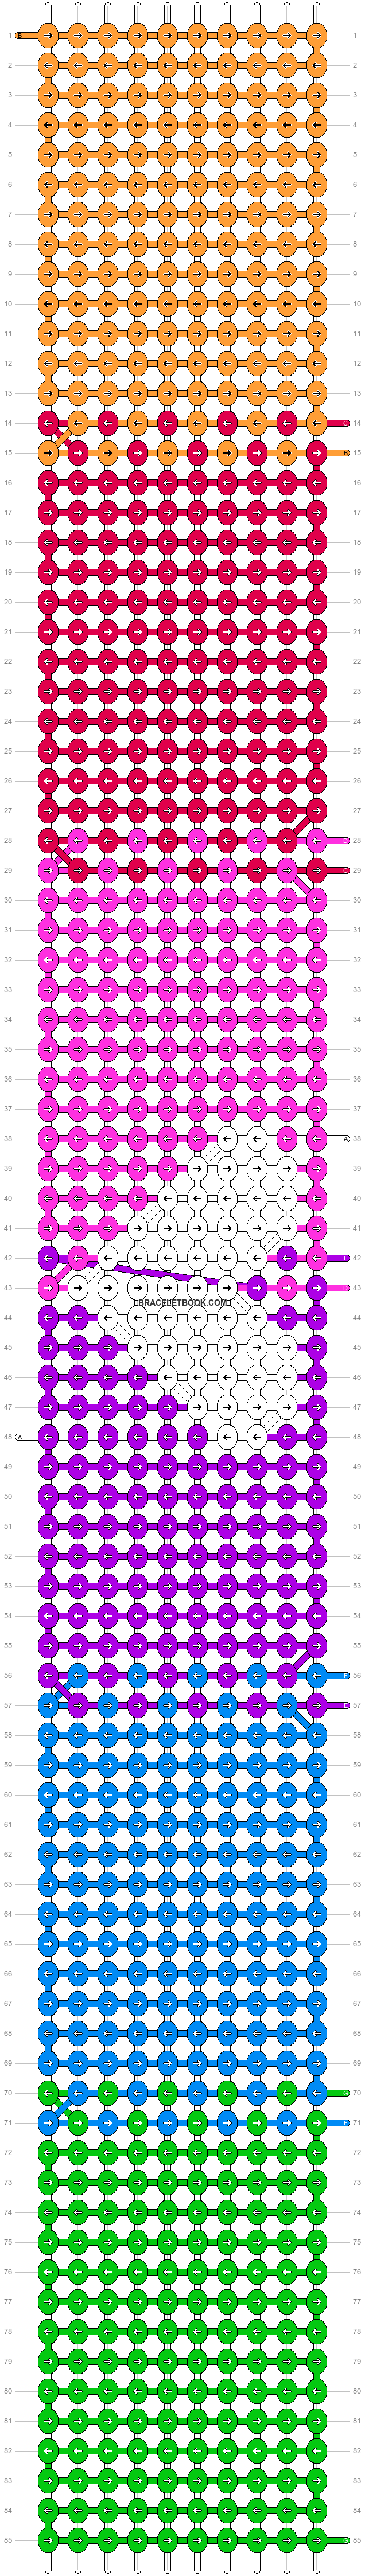 Alpha pattern #35030 variation #36035 pattern